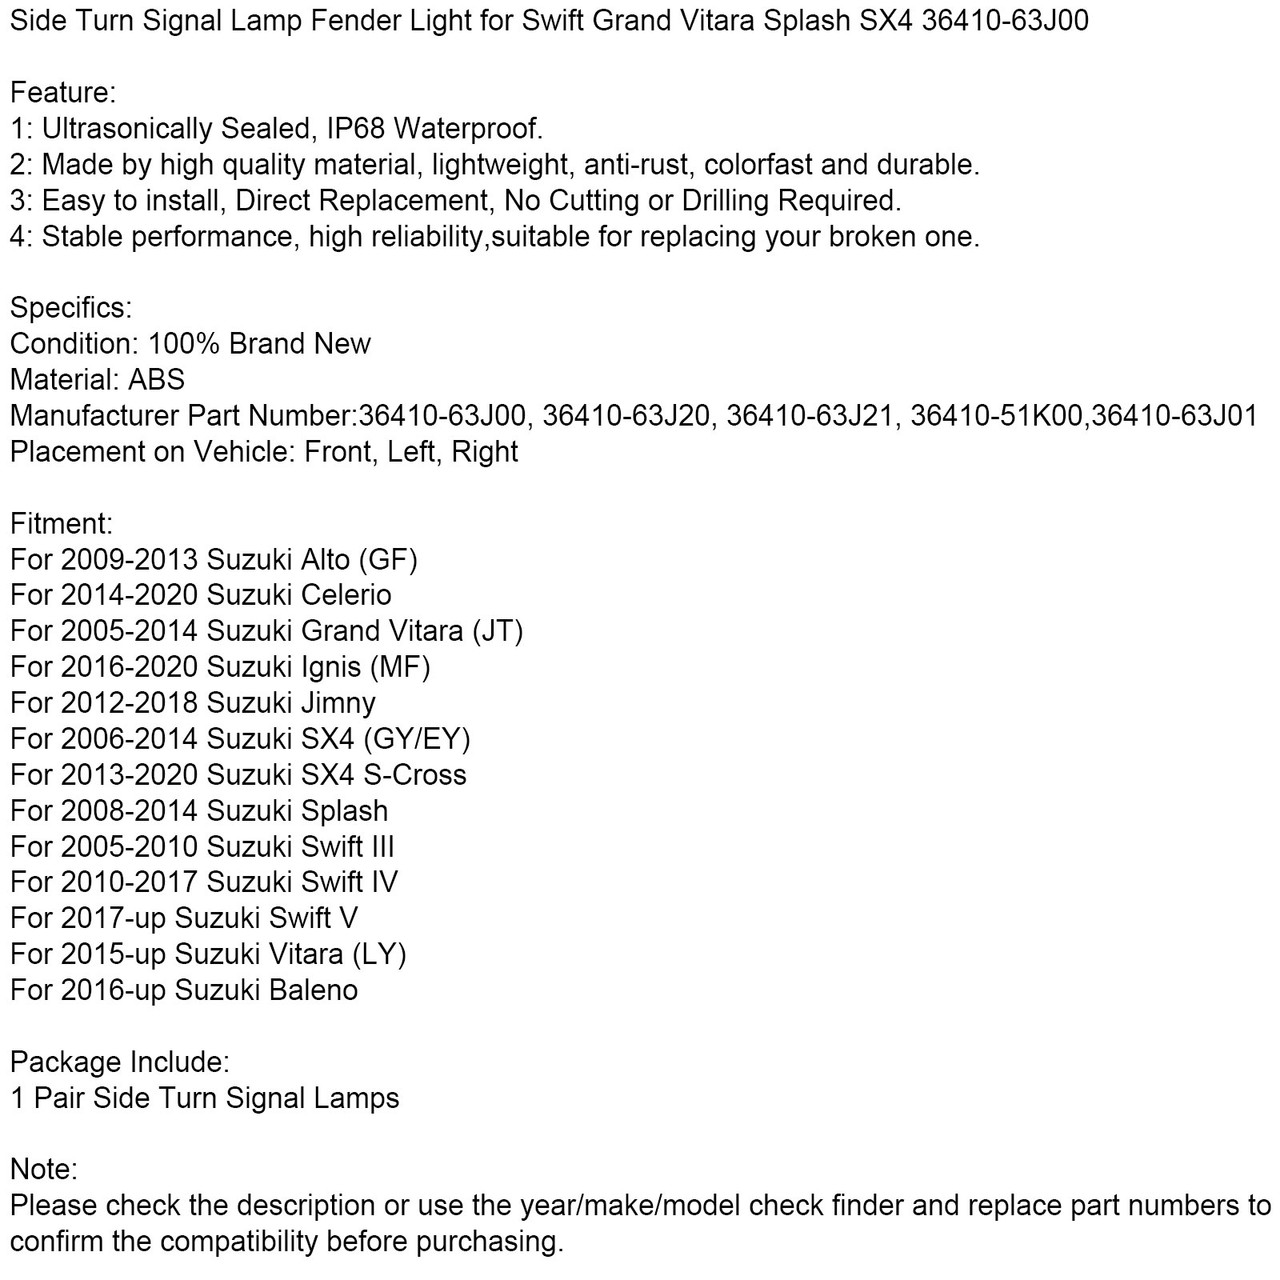 Side Turn Signal Lamp Fender Light Fit for Suzuki Alto Splash 09-13 Celerio 14-20 Grand Vitara 05-14 Ignis SX4 S-Cross 16-20 Jimny SX4 S-Cross 13-18 Swift IV 10-17 Clear